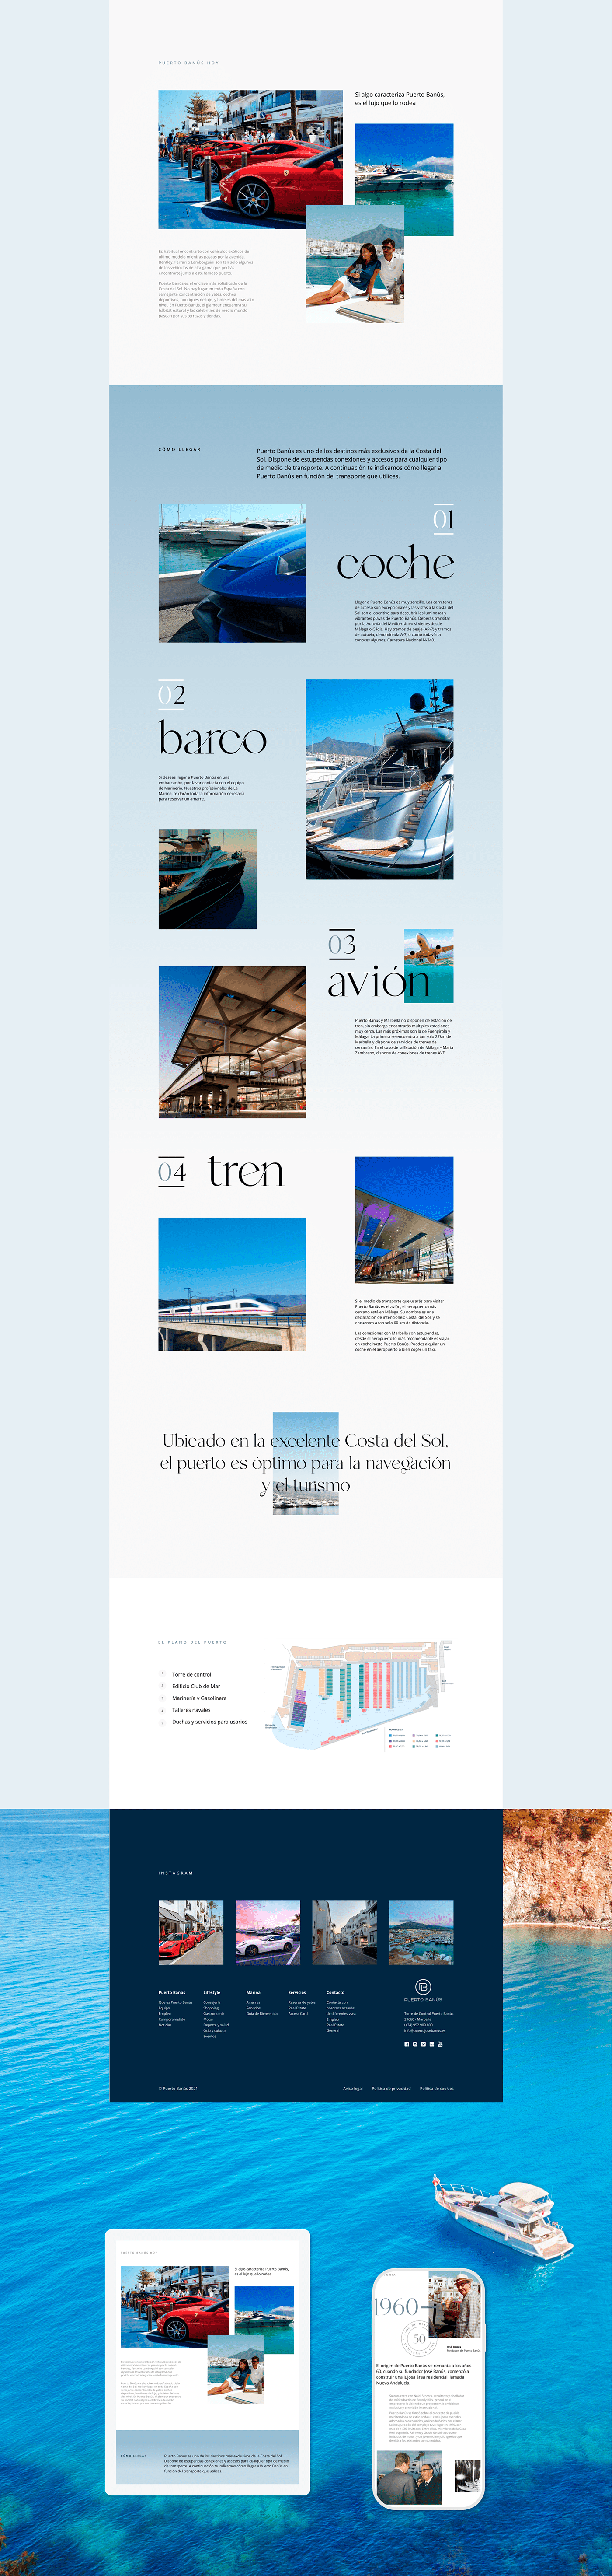 redesign Webdesign Yachts sea lifestyle puerto banus ui design ux/ui design Website concept